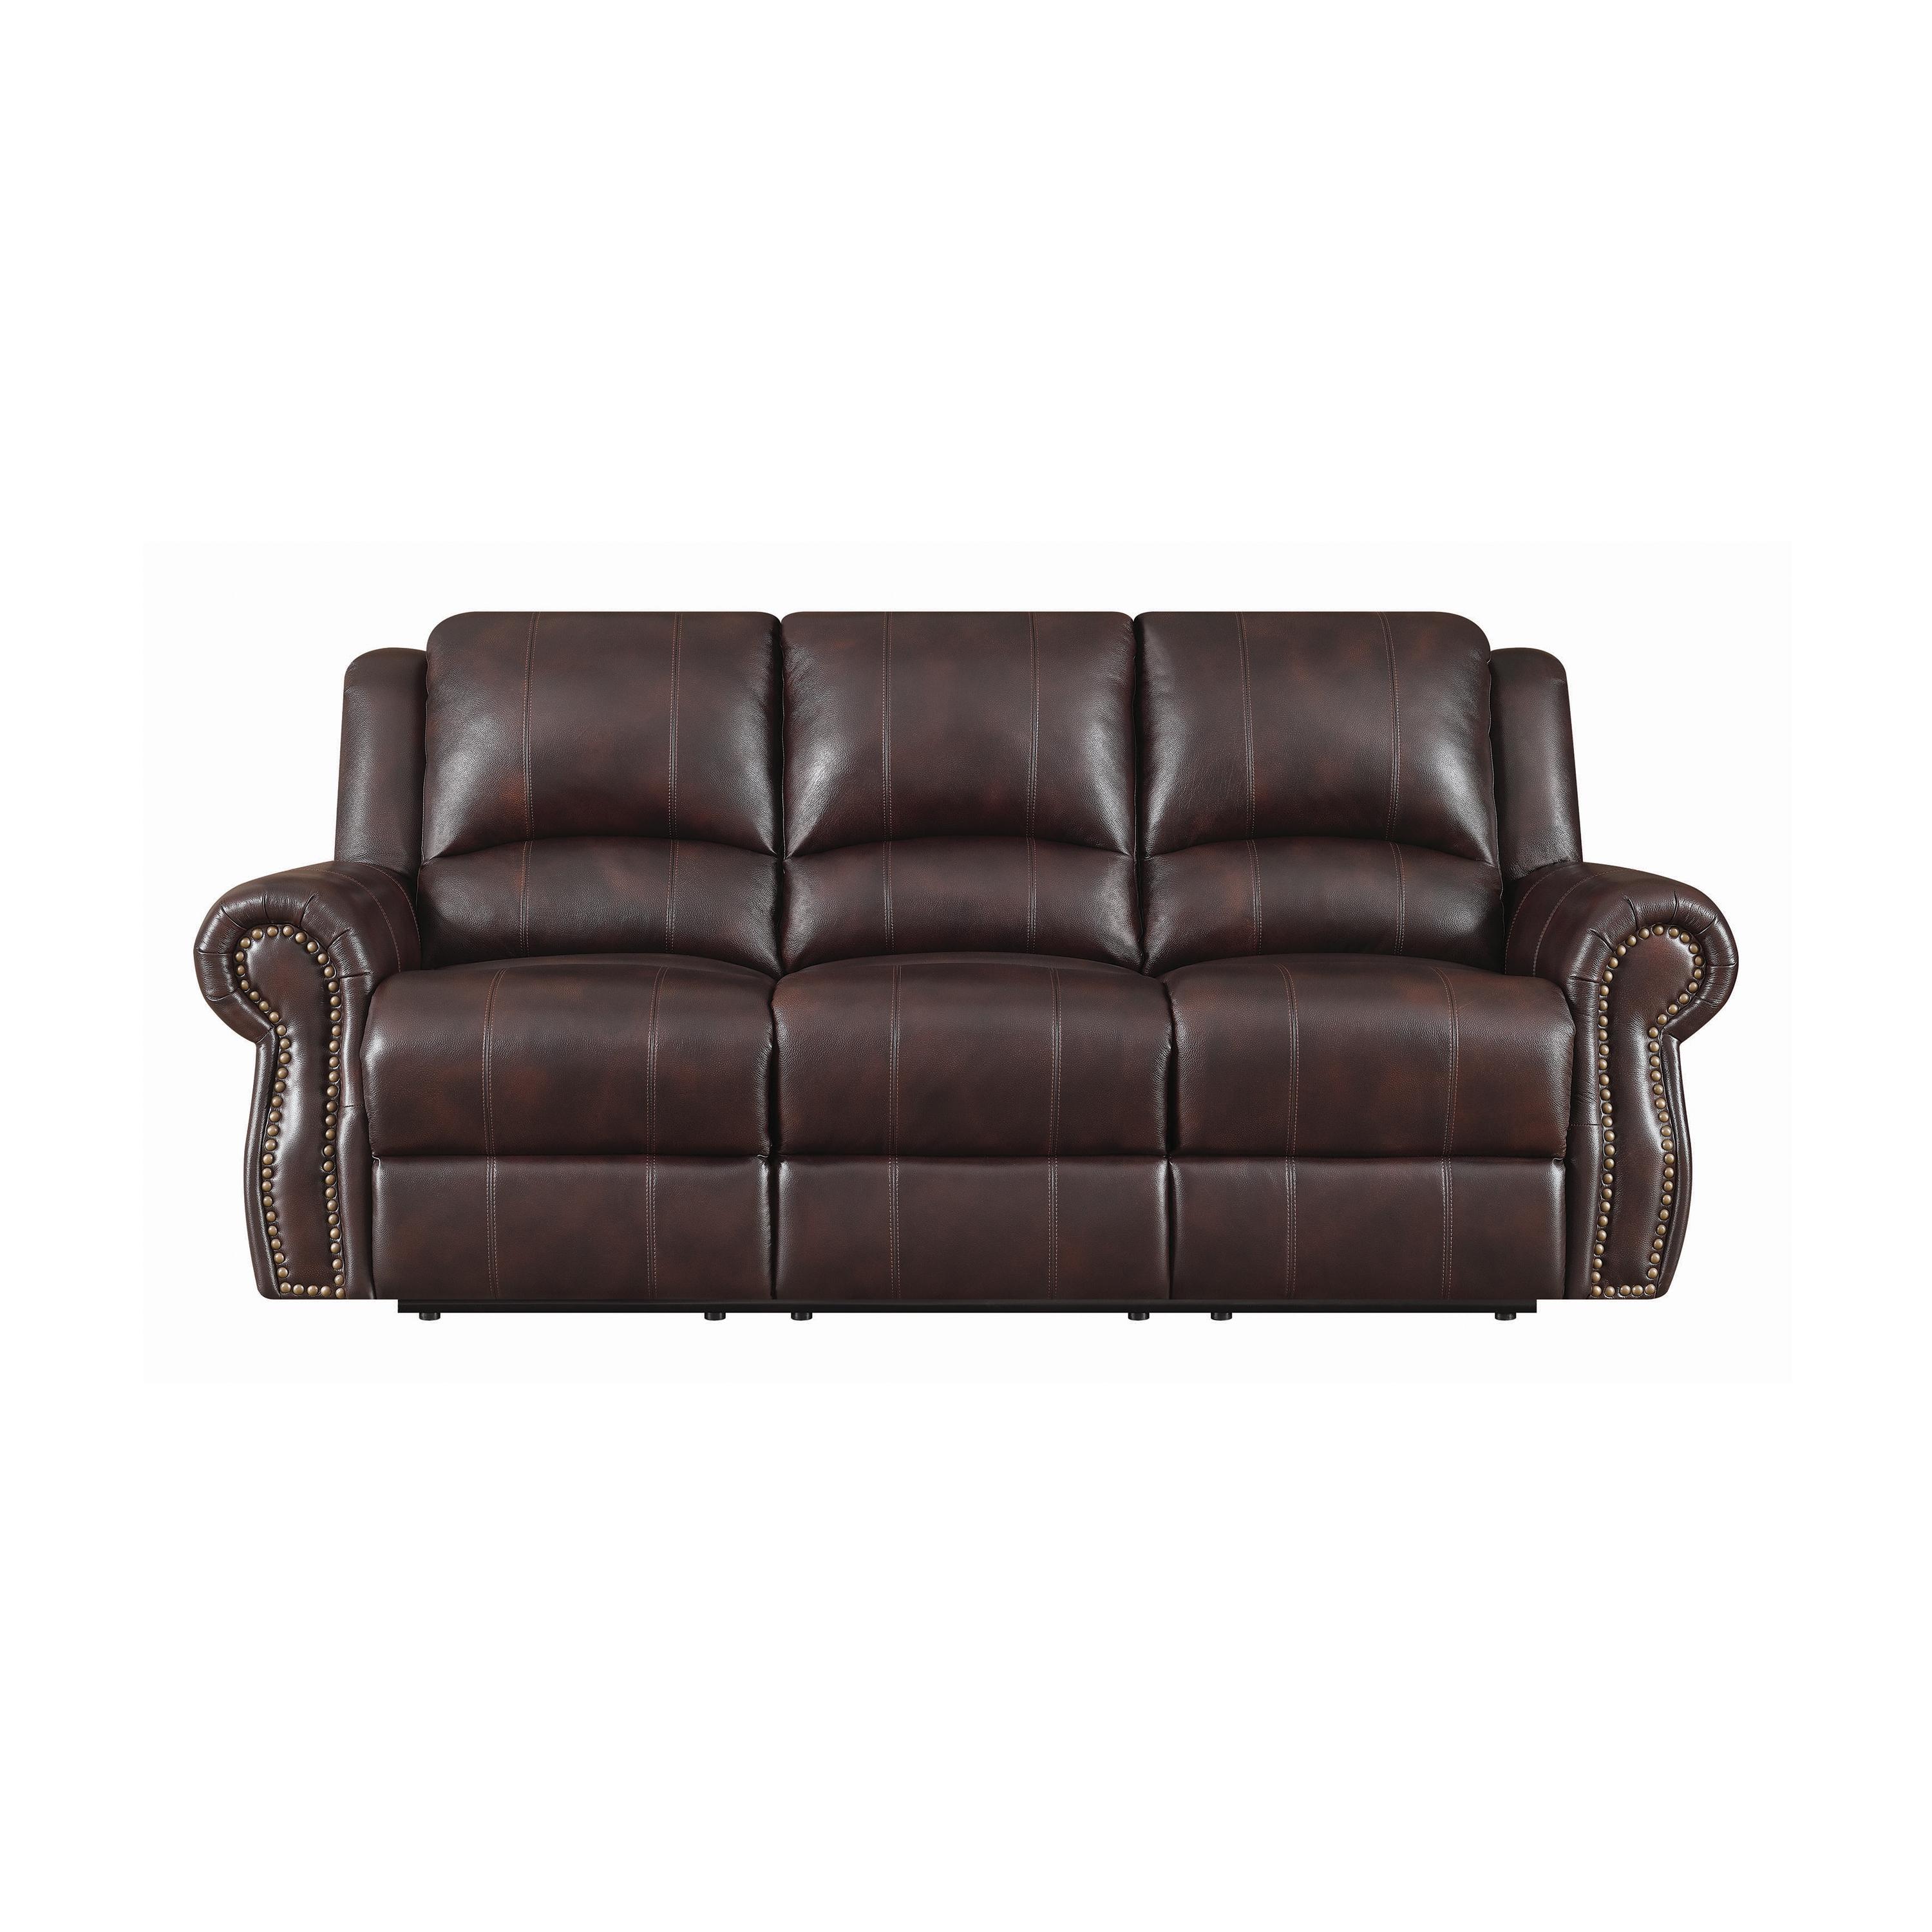 Traditional Motion Sofa 650161 Sir Rawlinson 650161 in Dark Brown Leather